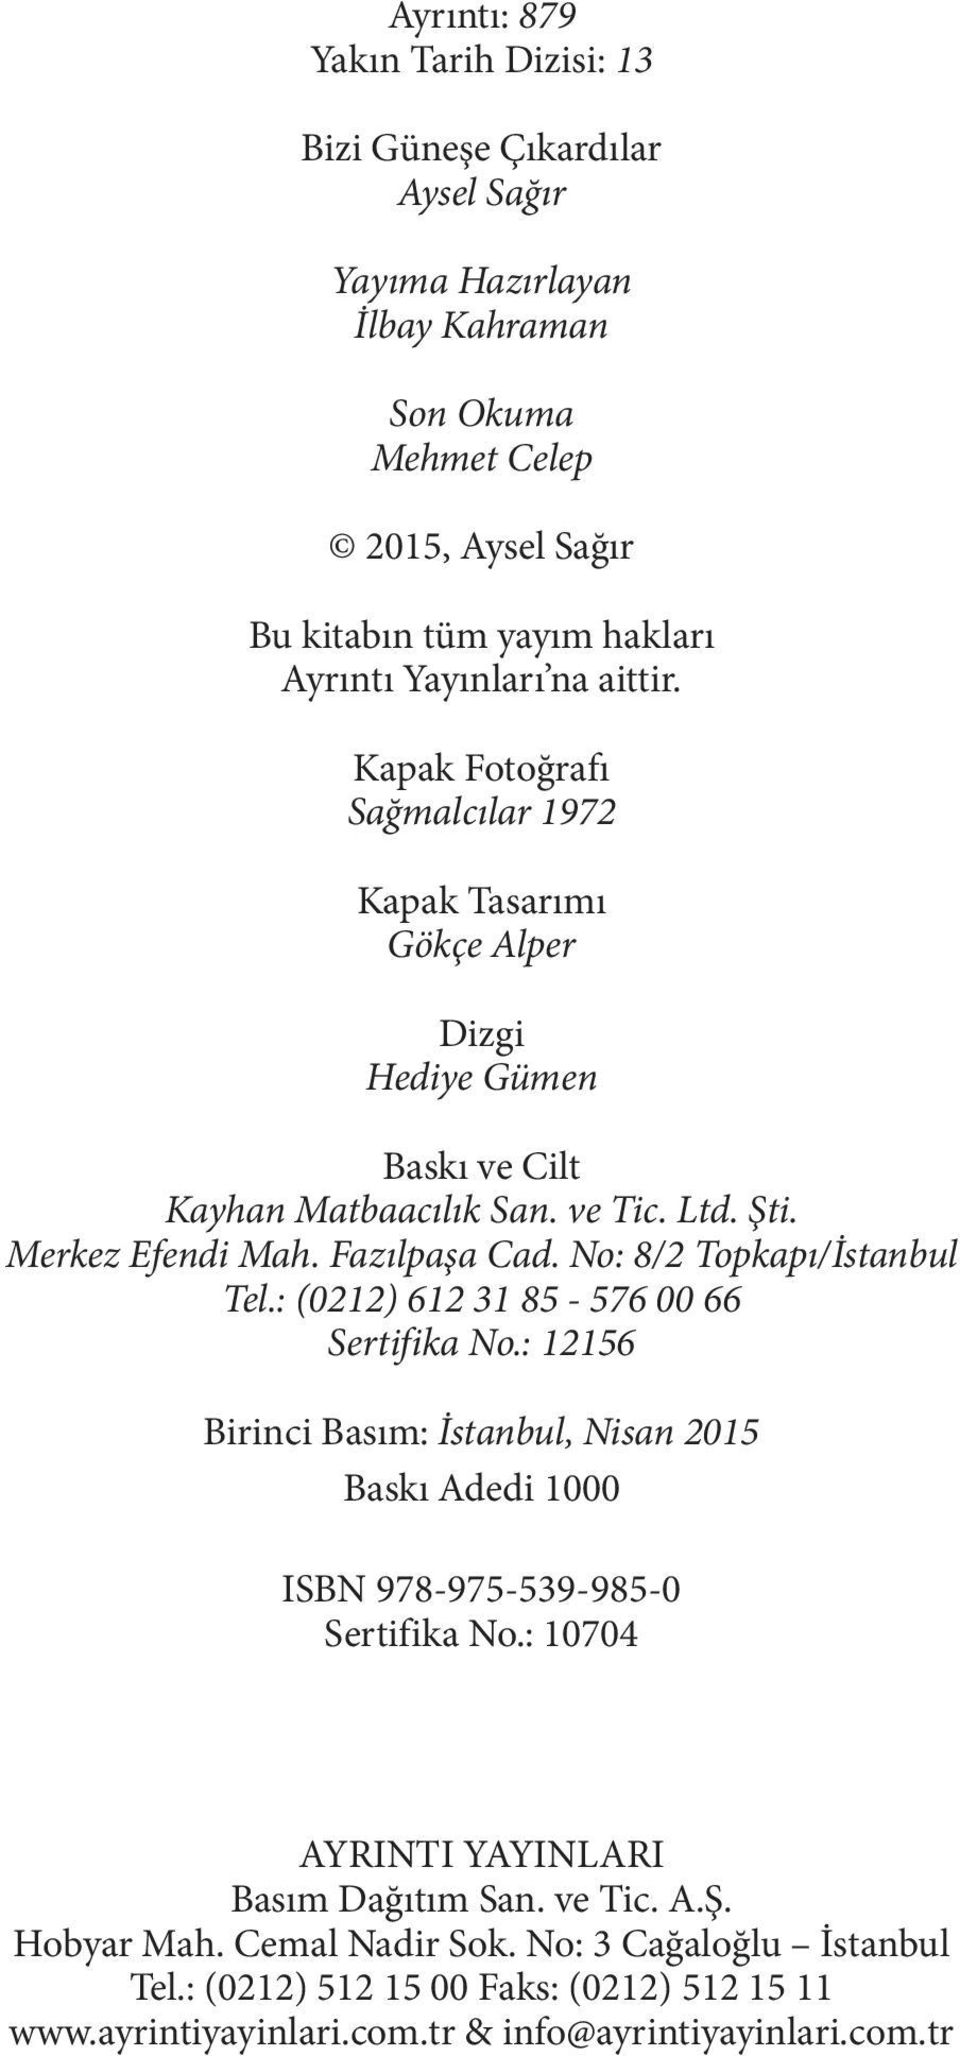 No: 8/2 Topkapı/İstanbul Tel.: (0212) 612 31 85-576 00 66 Sertifika No.: 12156 Birinci Basım: İstanbul, Nisan 2015 Baskı Adedi 1000 ISBN 978-975-539-985-0 Sertifika No.